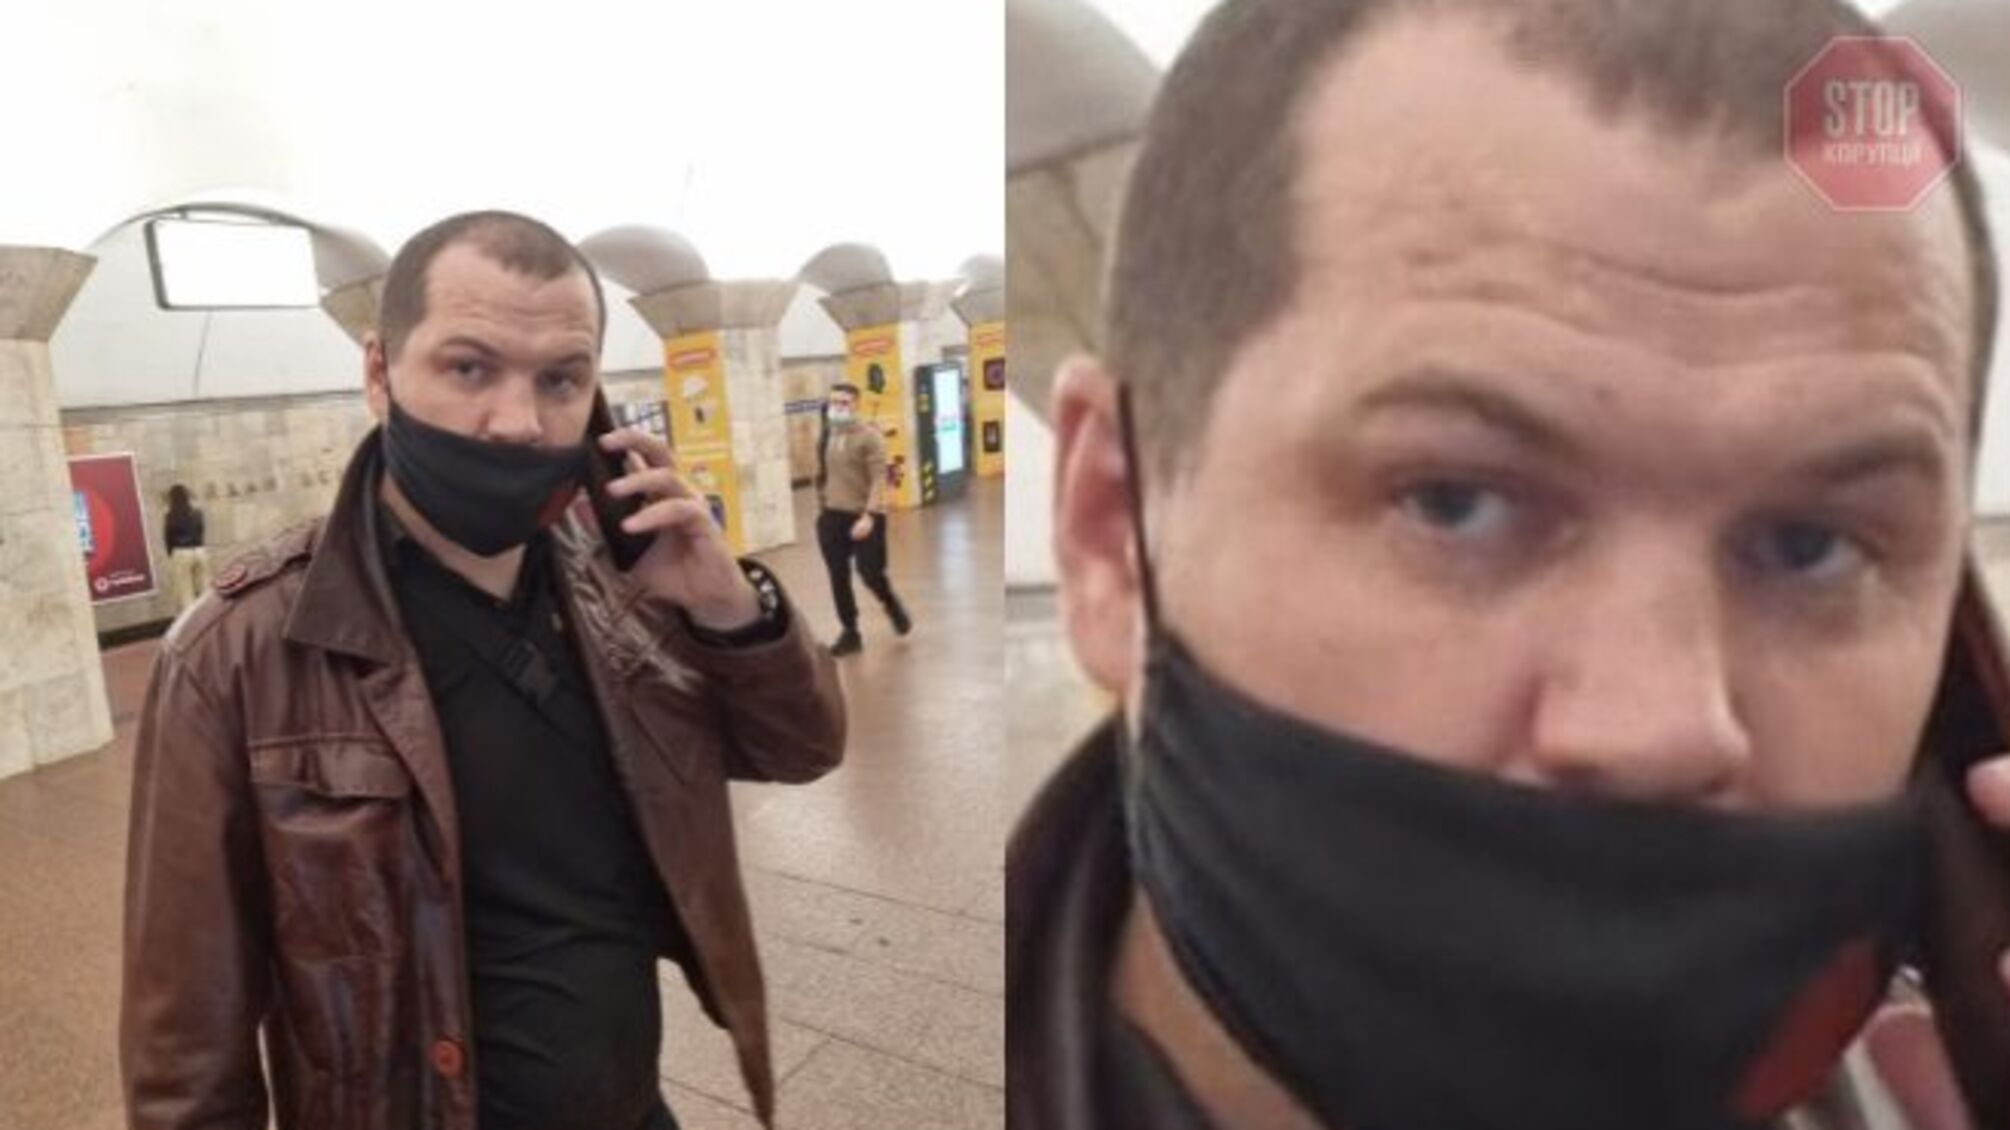 Напал на женщину в метро: в Киеве ищут агрессивного неадеквата (фото)